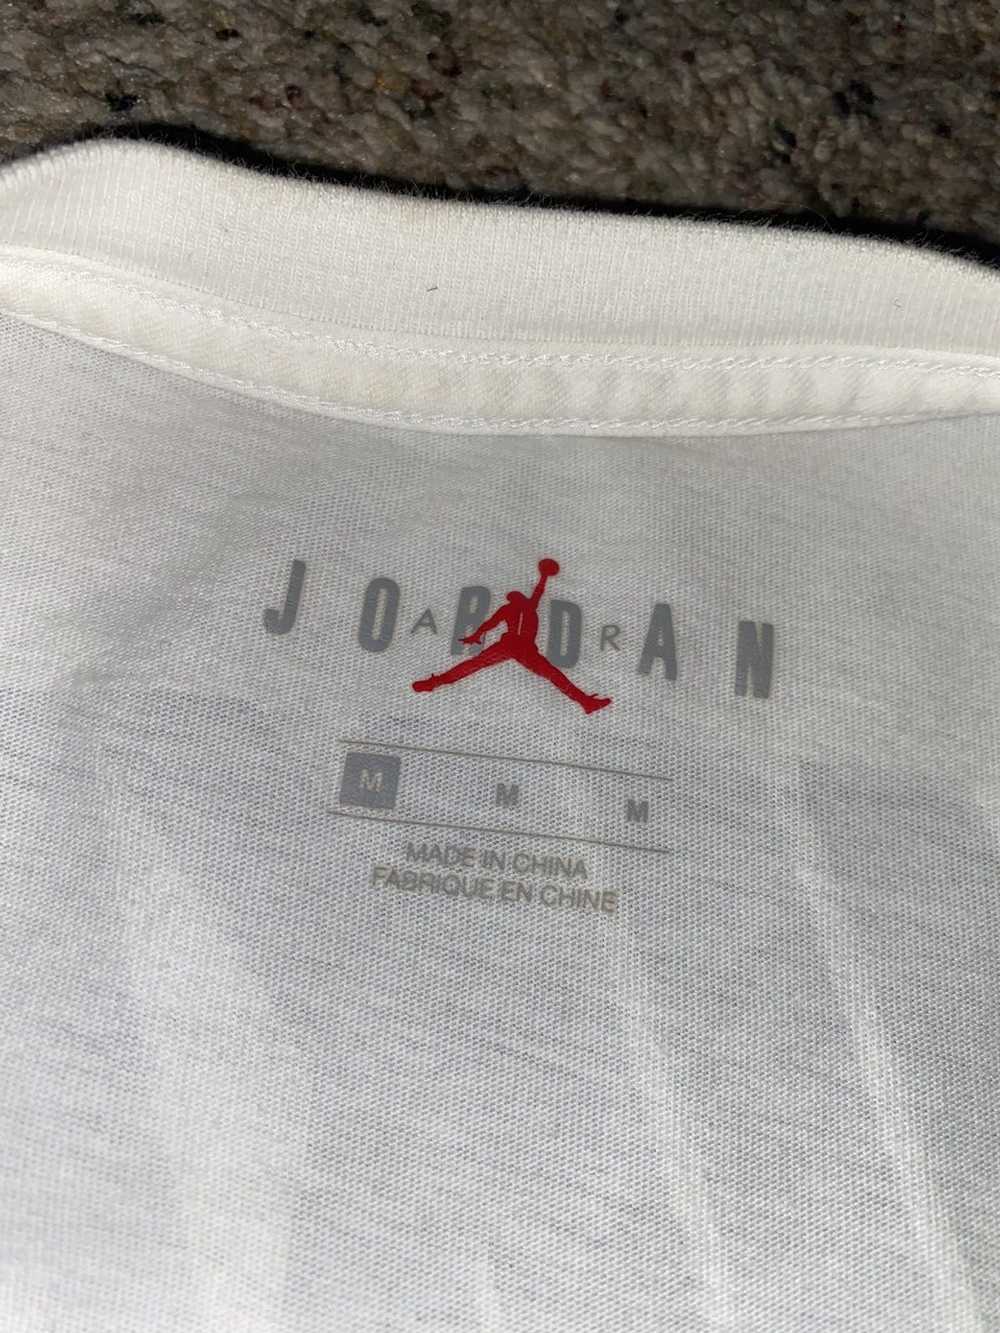 Jordan Brand × Nike Nike Air Jordan T shirt - image 4